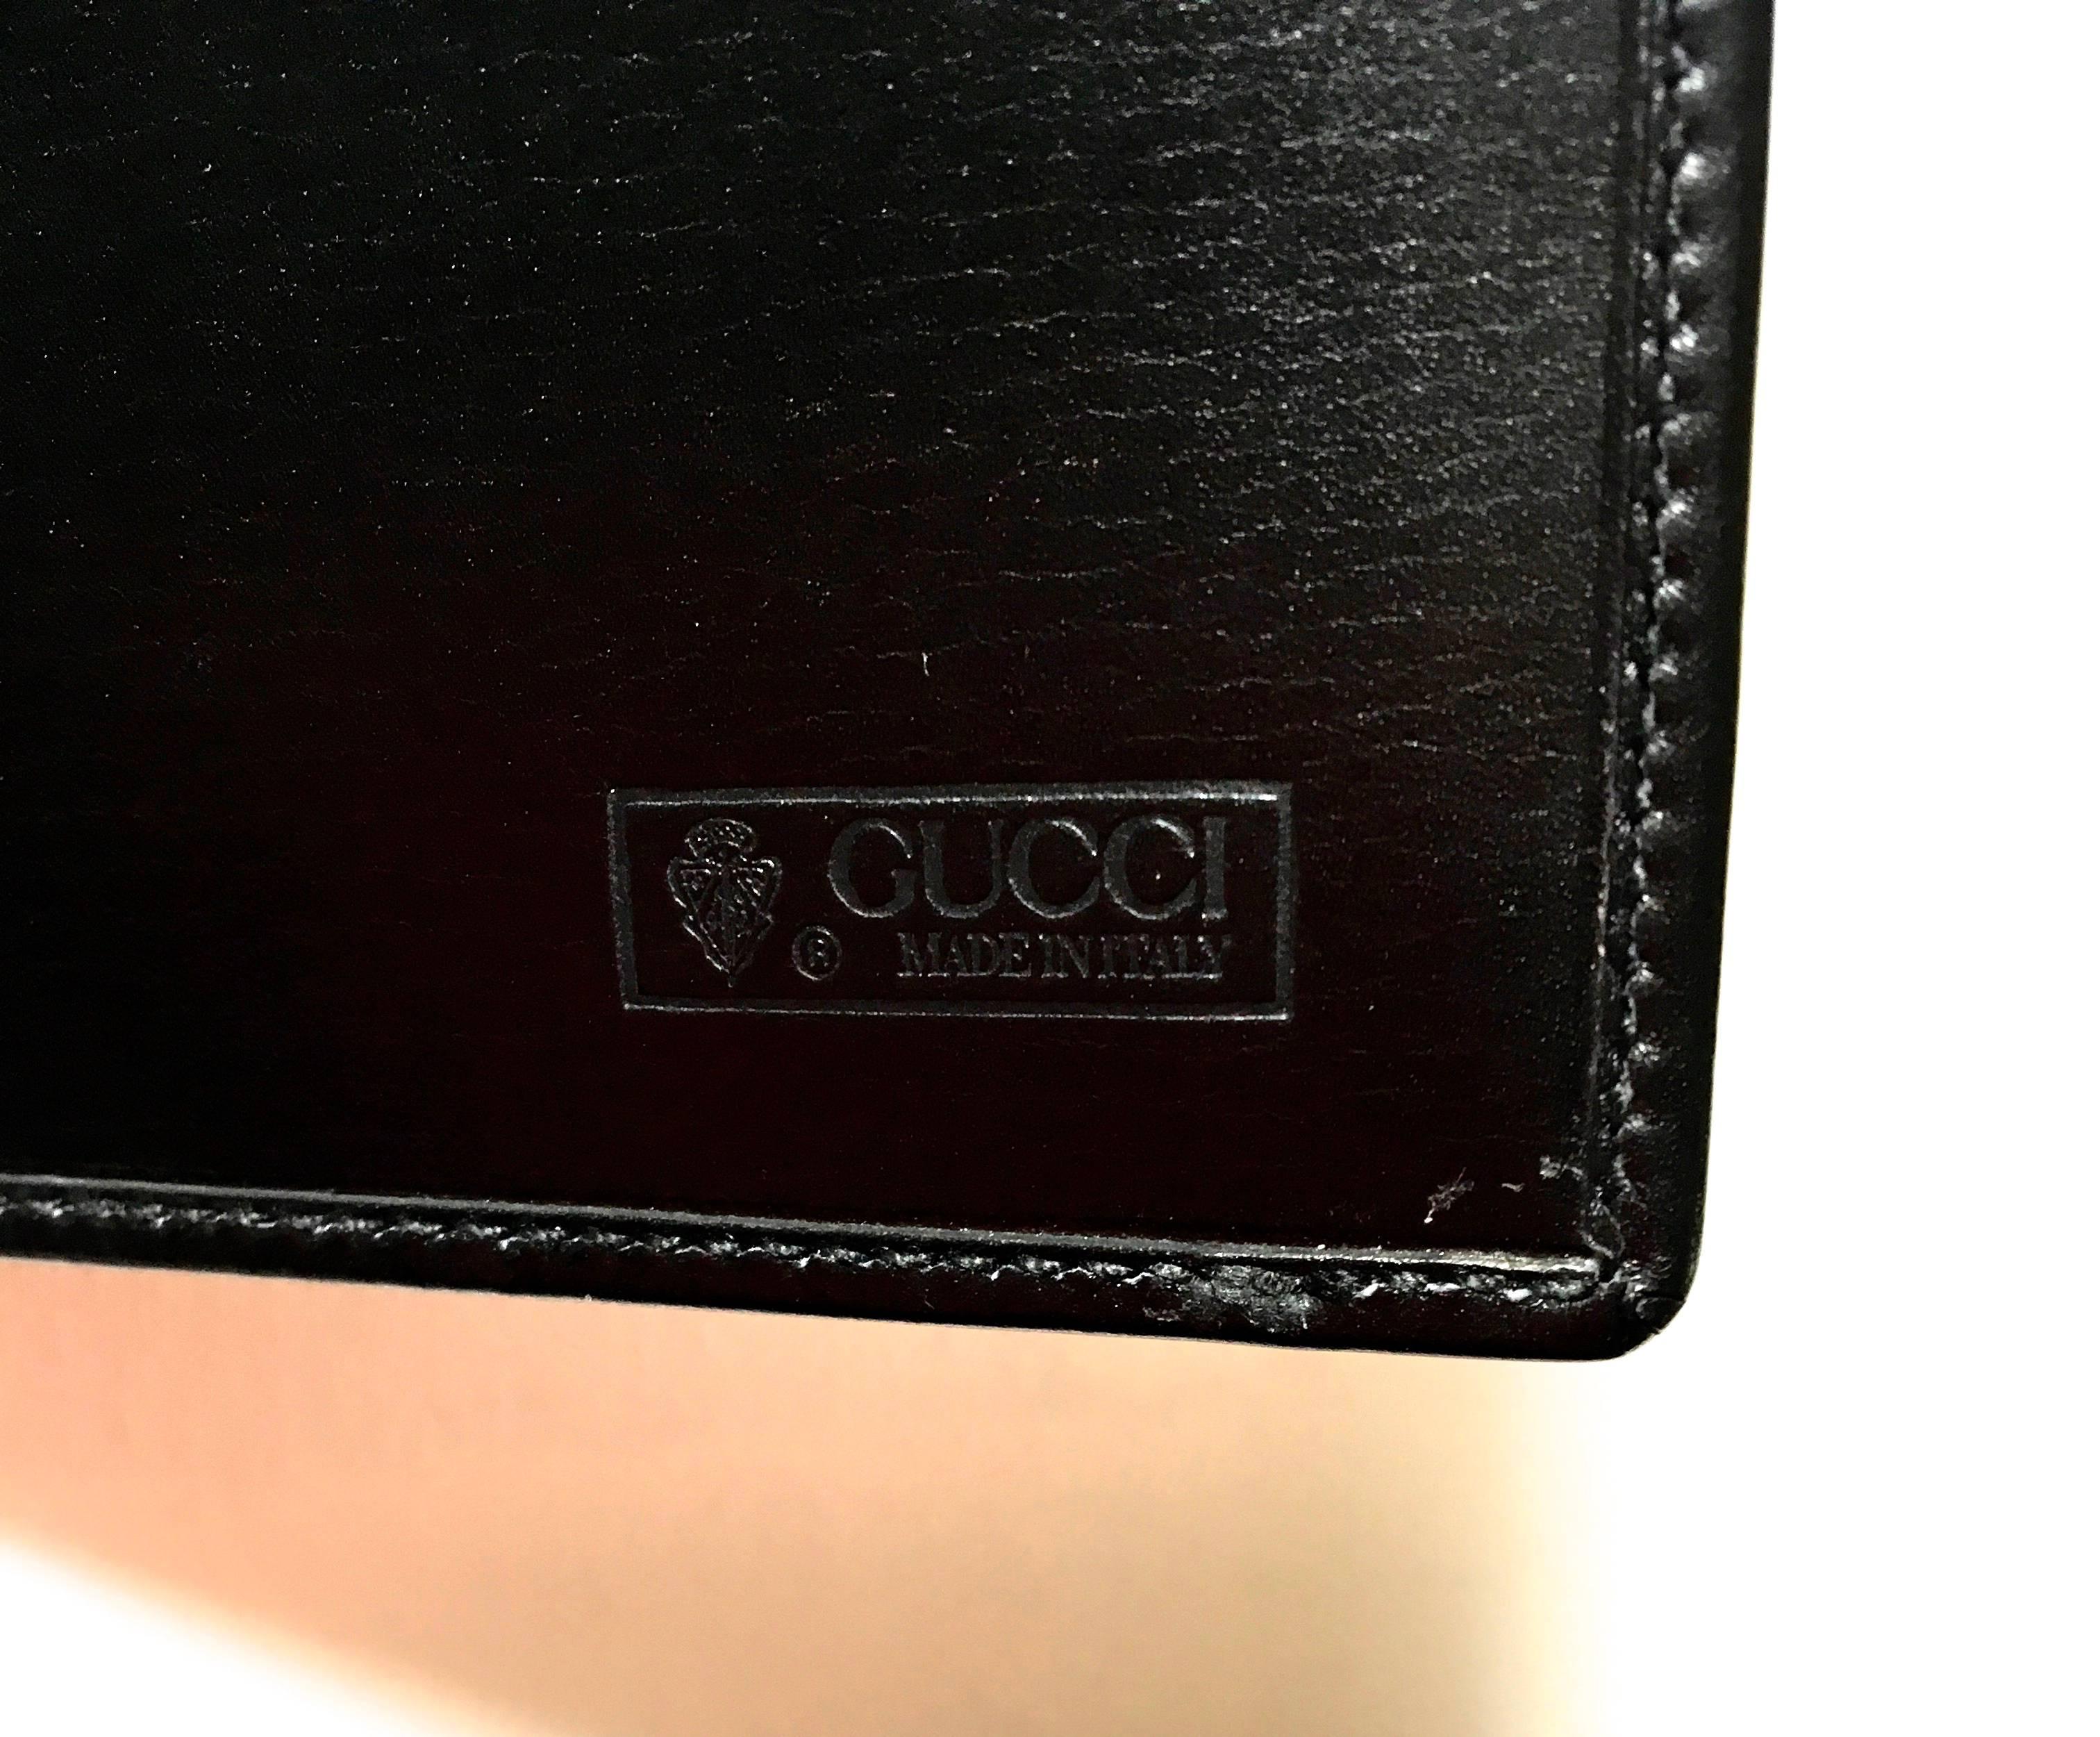 Black Vintage Gucci Leather Cigar Case - Mint Condition